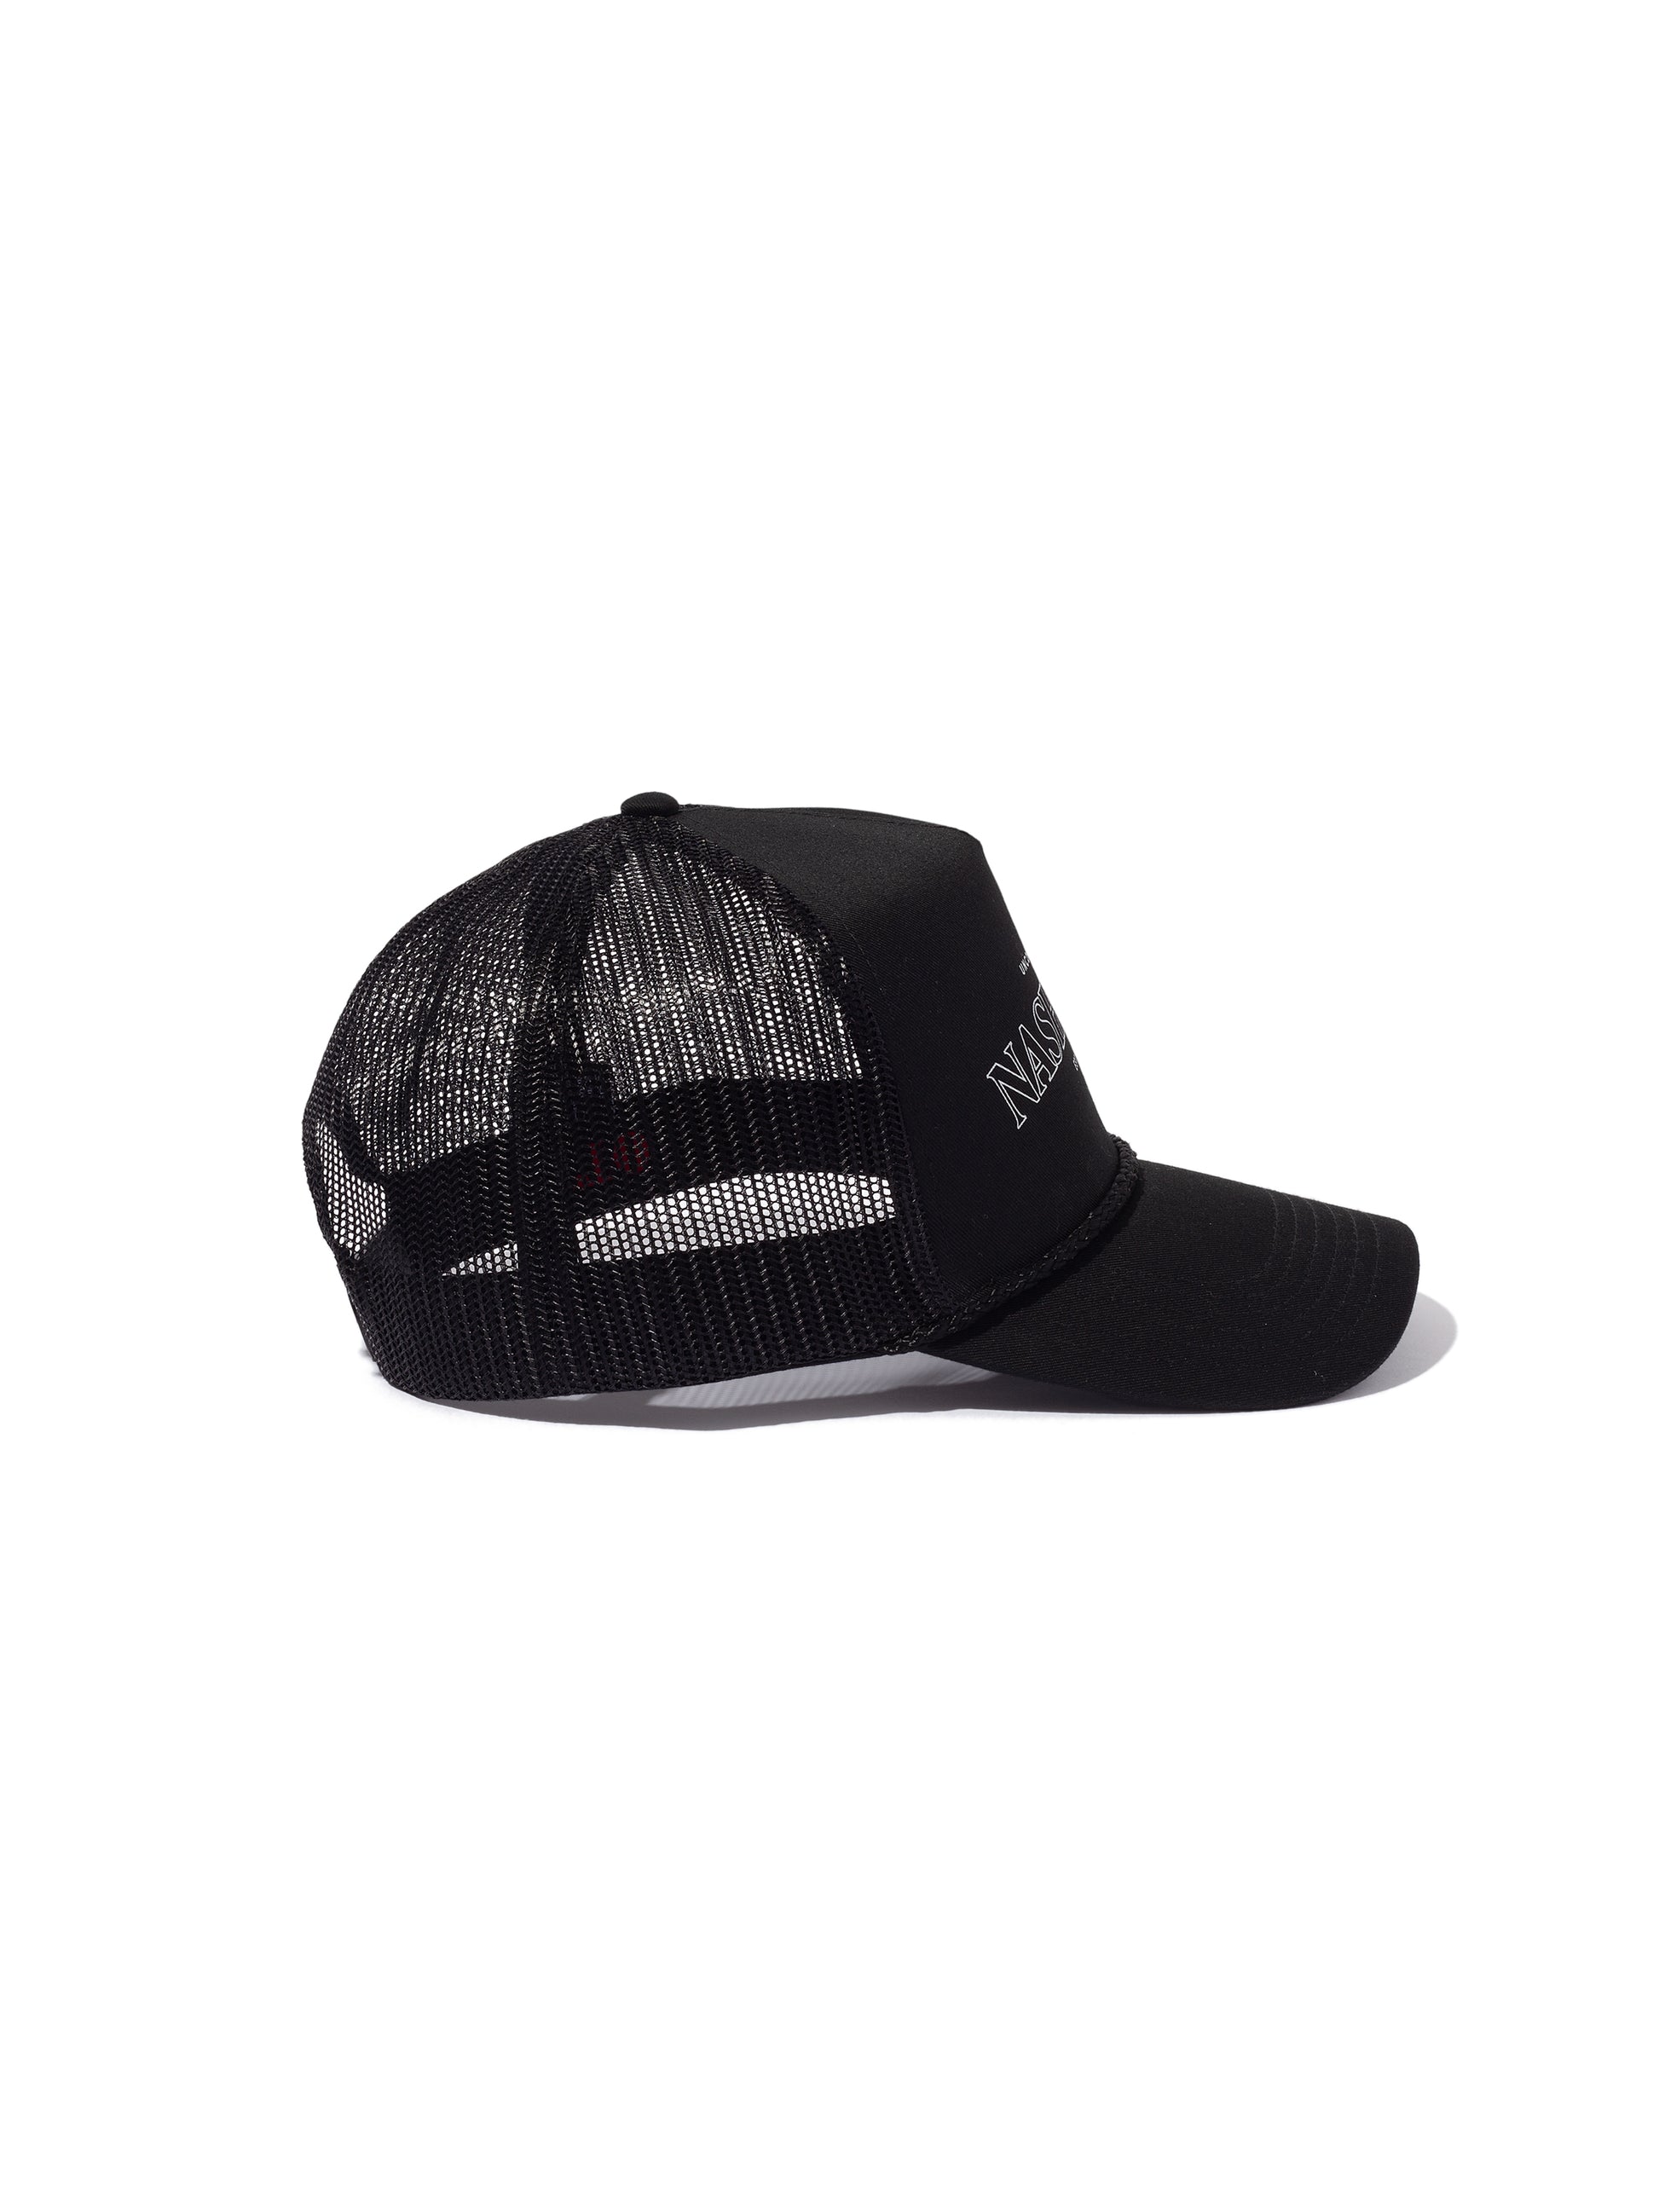 Nashville Trucker Hat | Black | Product Detail Image | Uncommon Lifestyle